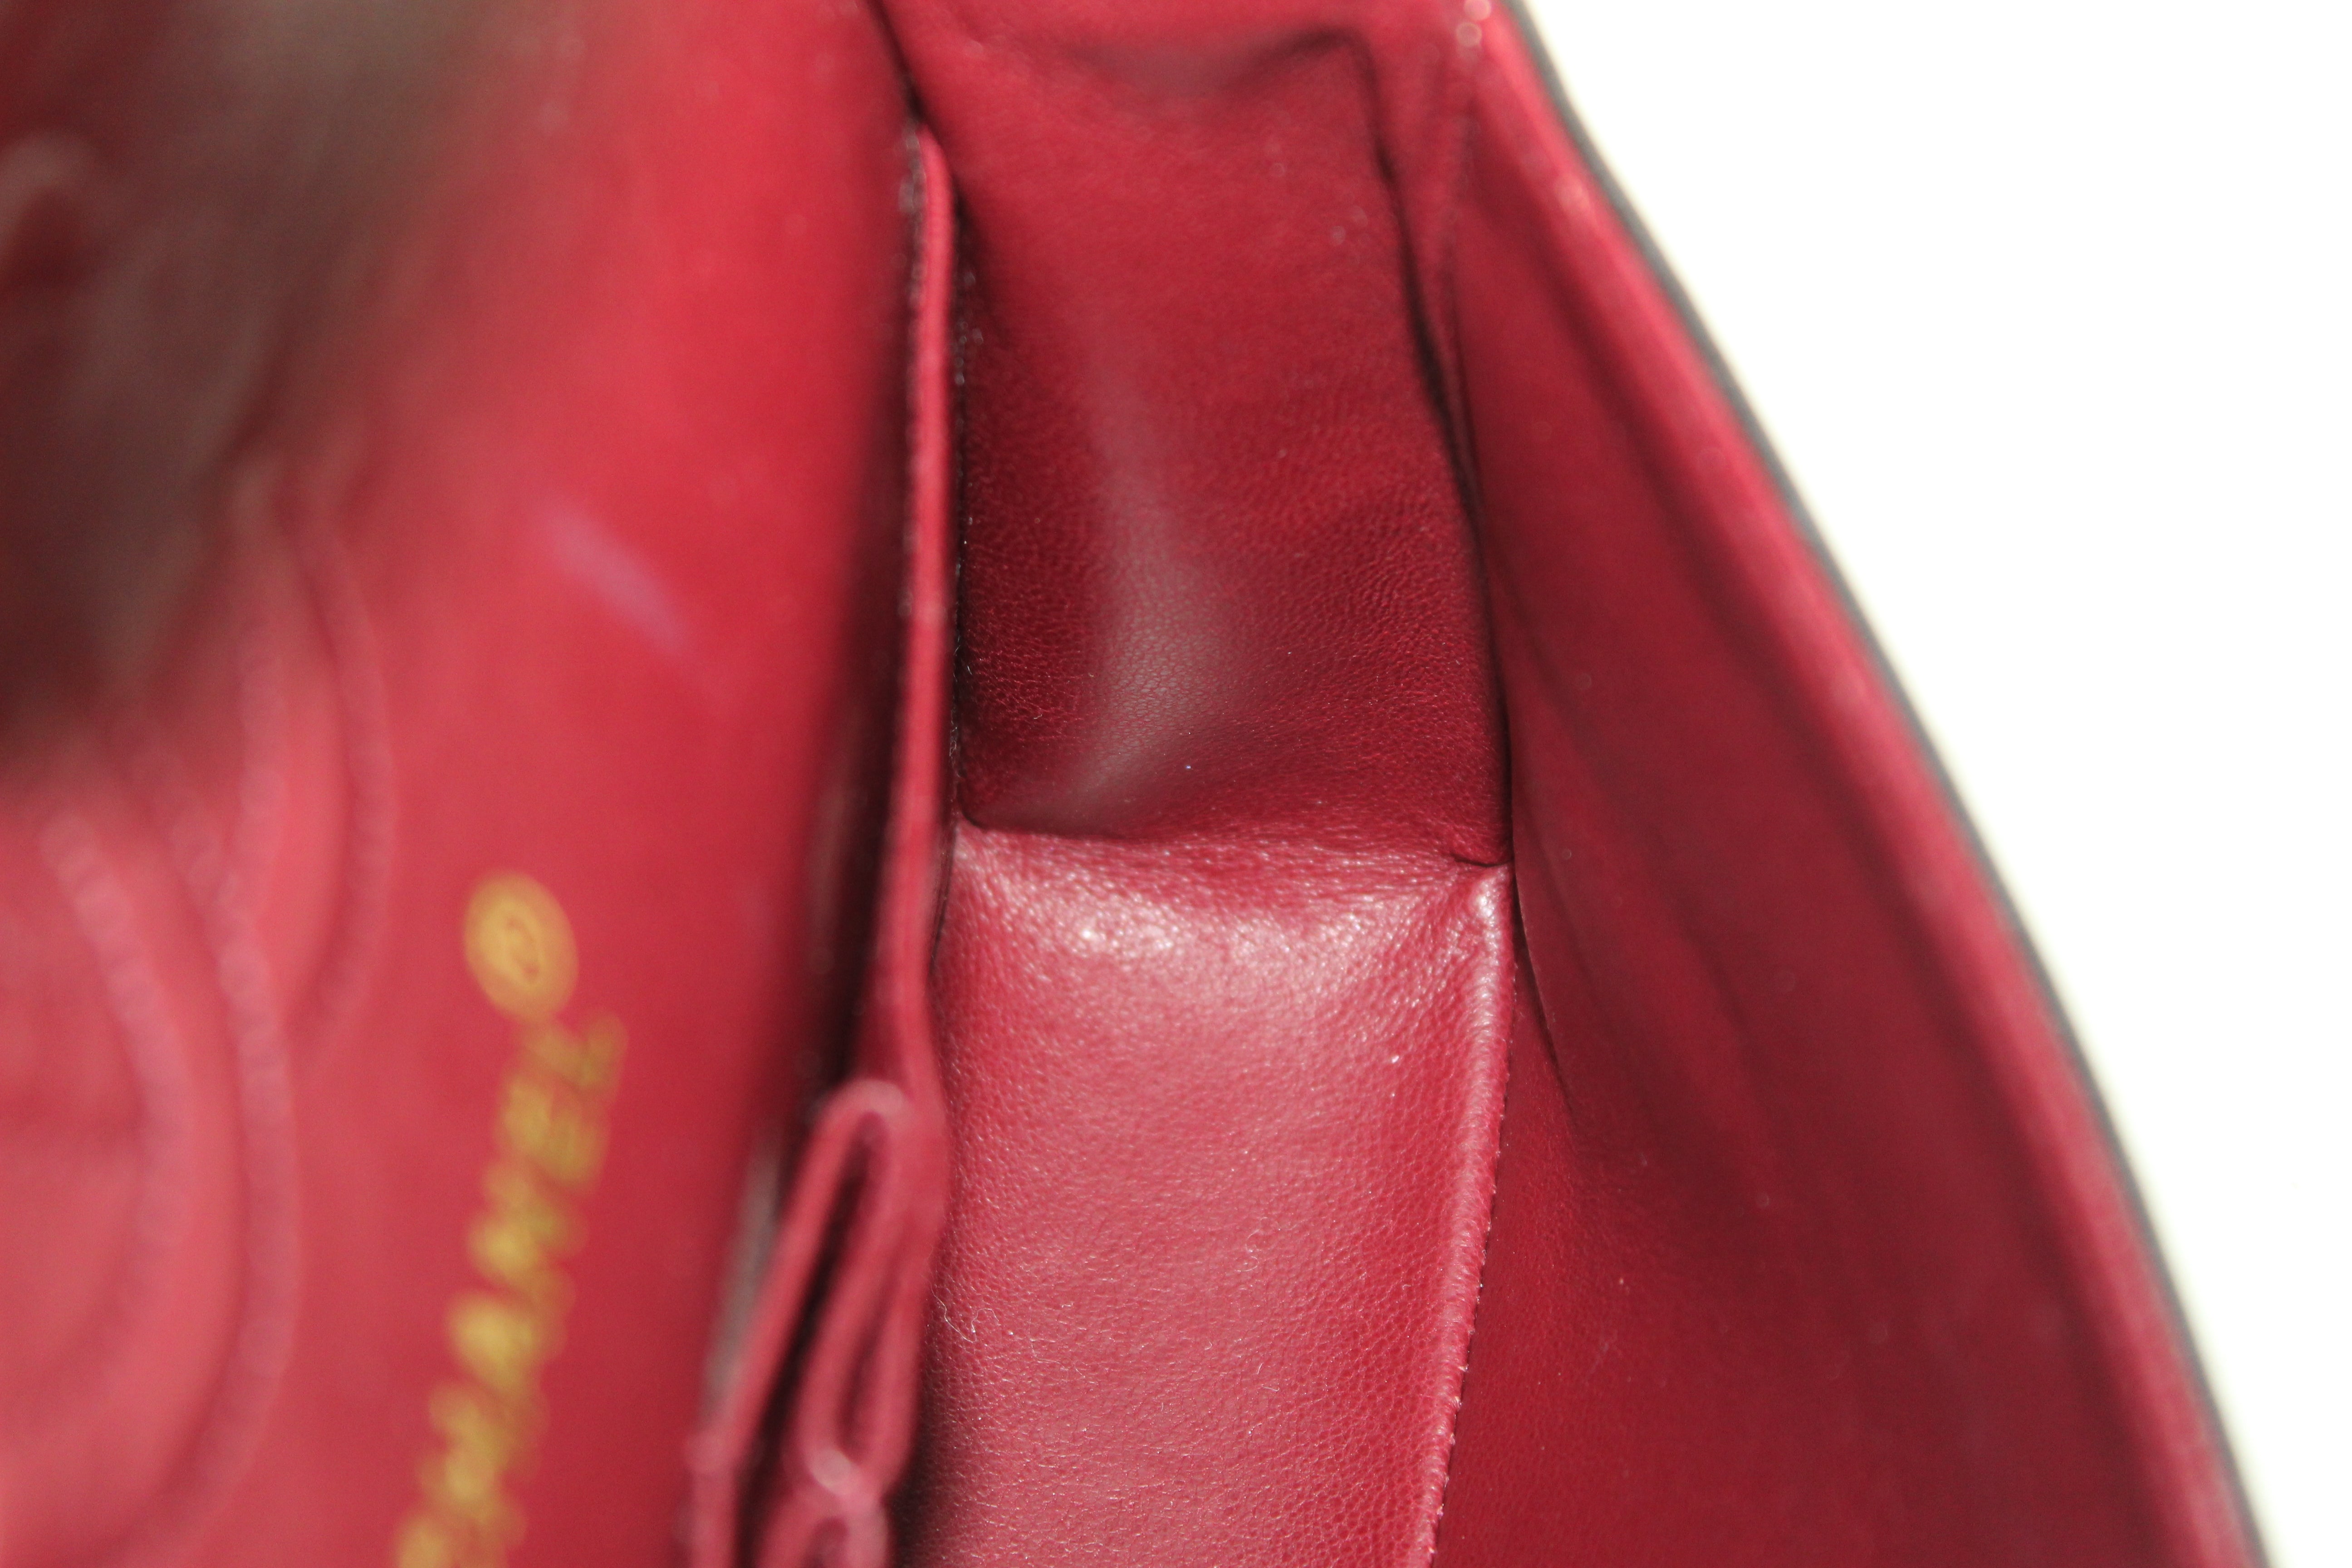 Authentic Chanel Vinatge Black Lambskin Leather Classic Medium Double Flap Bag